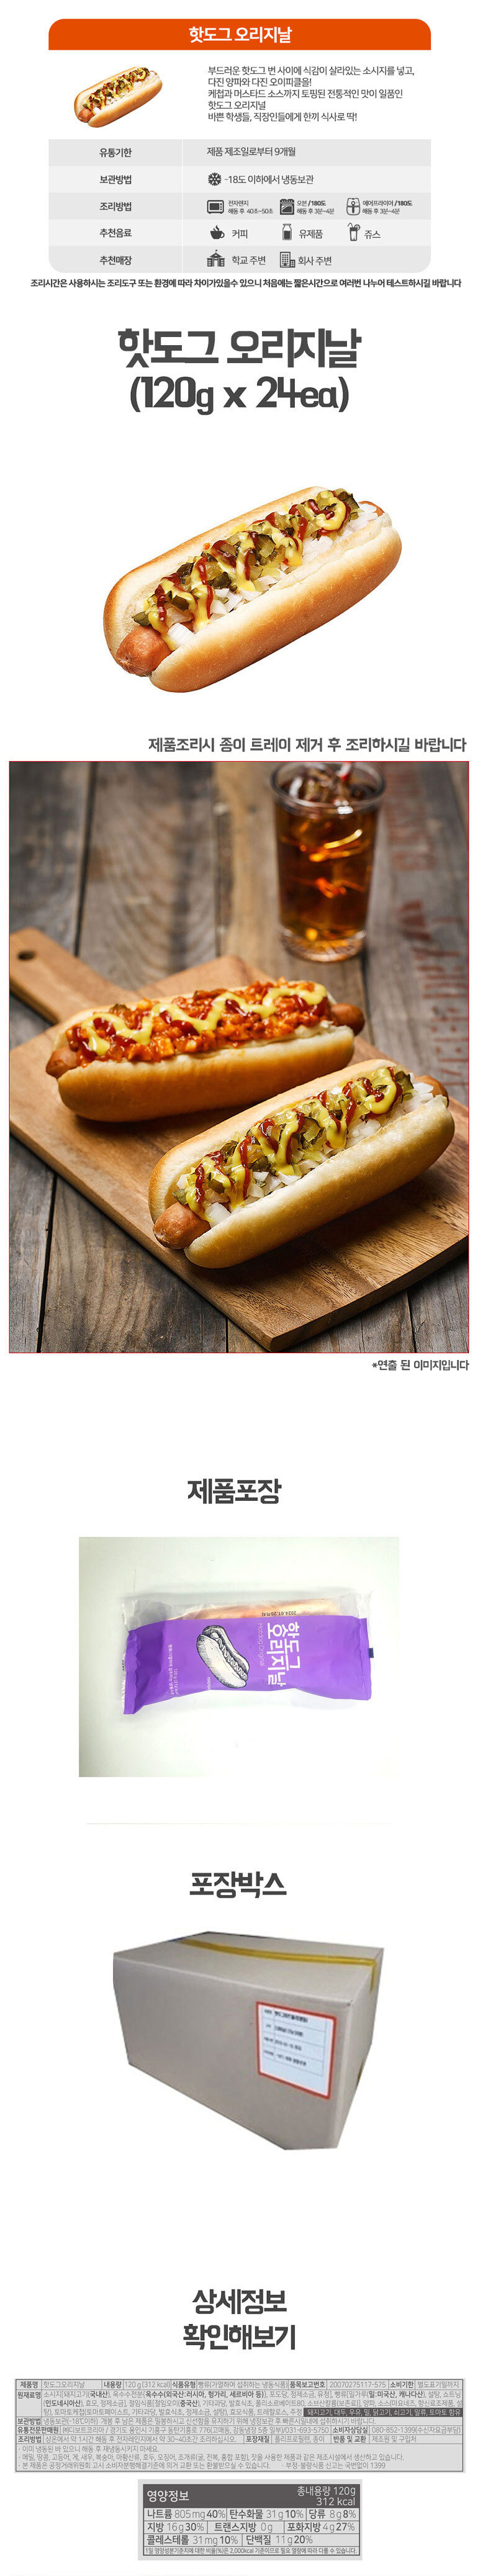 hotdog_original